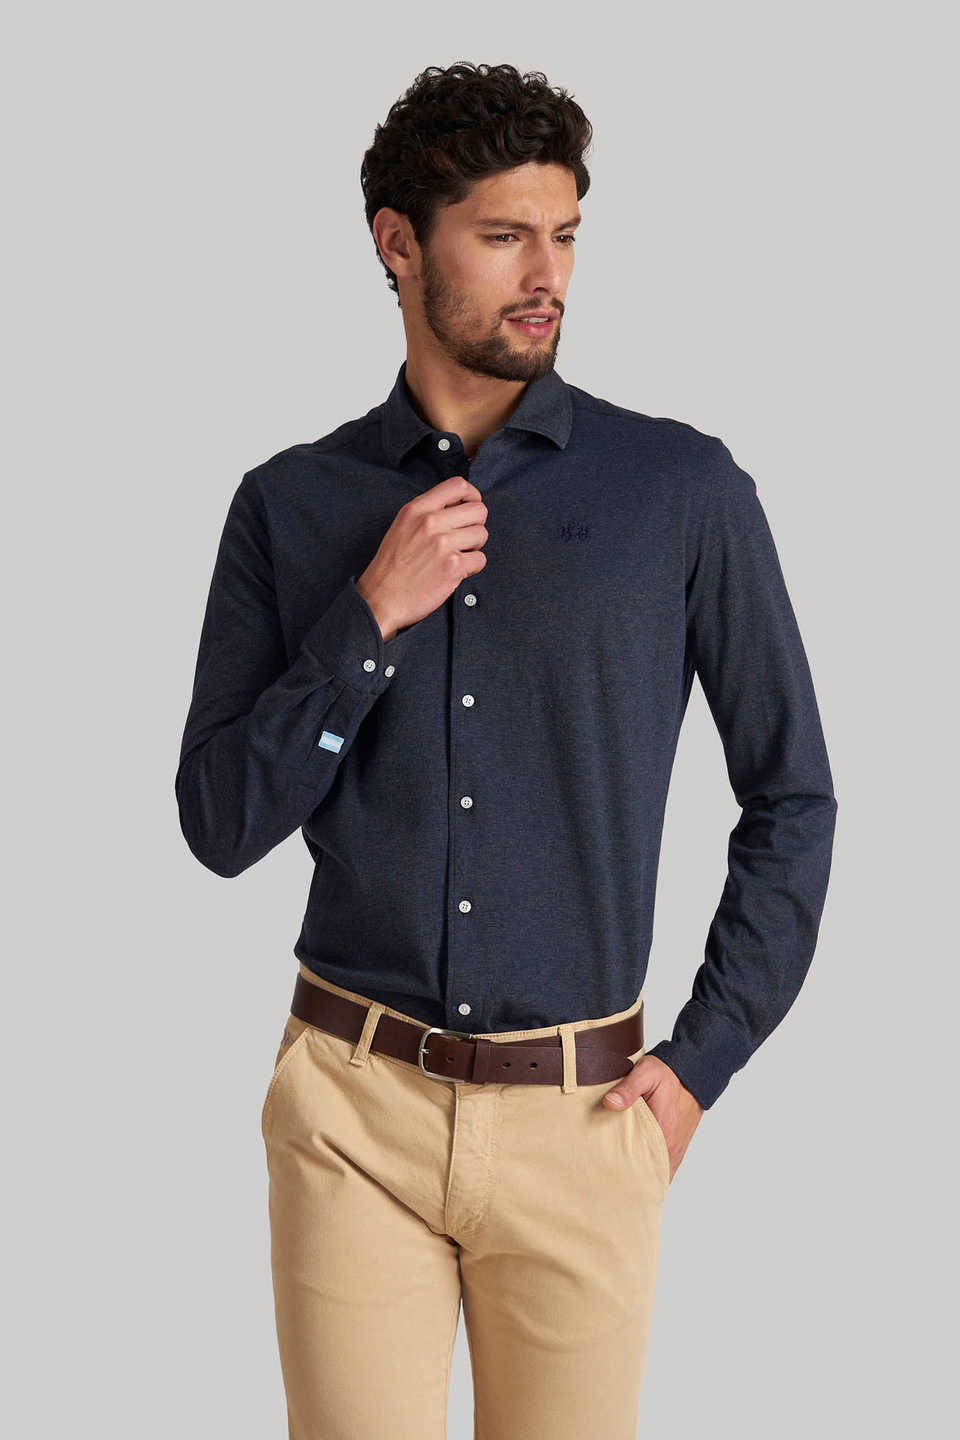 Custom-fit 100% cotton shirt | La Martina - Official Online Shop